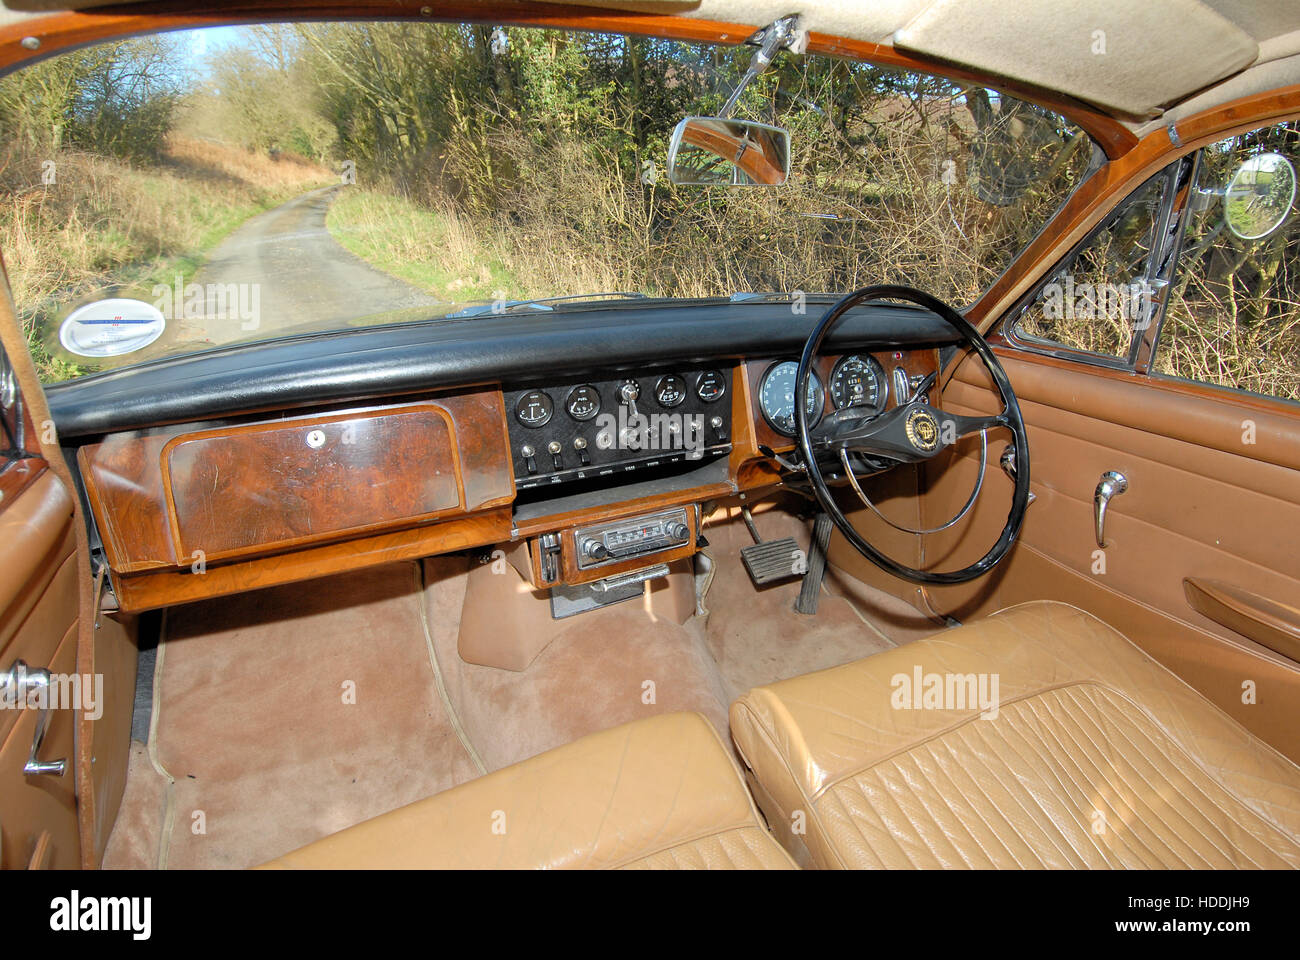 Daimler 2.5 V8 250 saloon car interior Stock Photo - Alamy